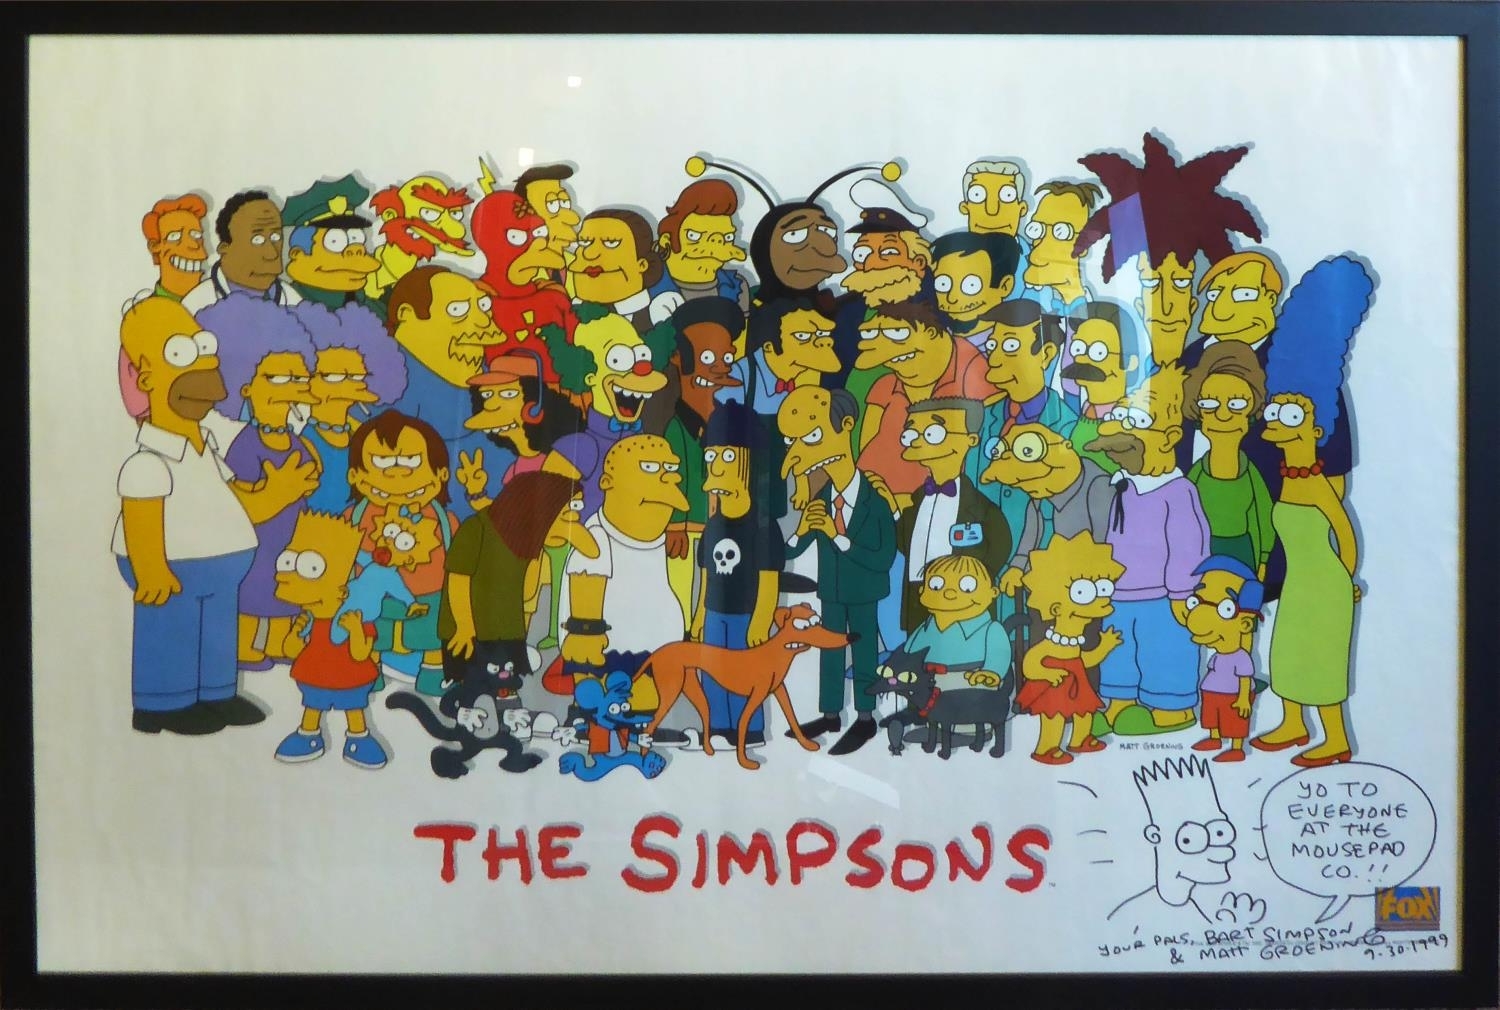 SIMPSONS POSTER by Matt Groening